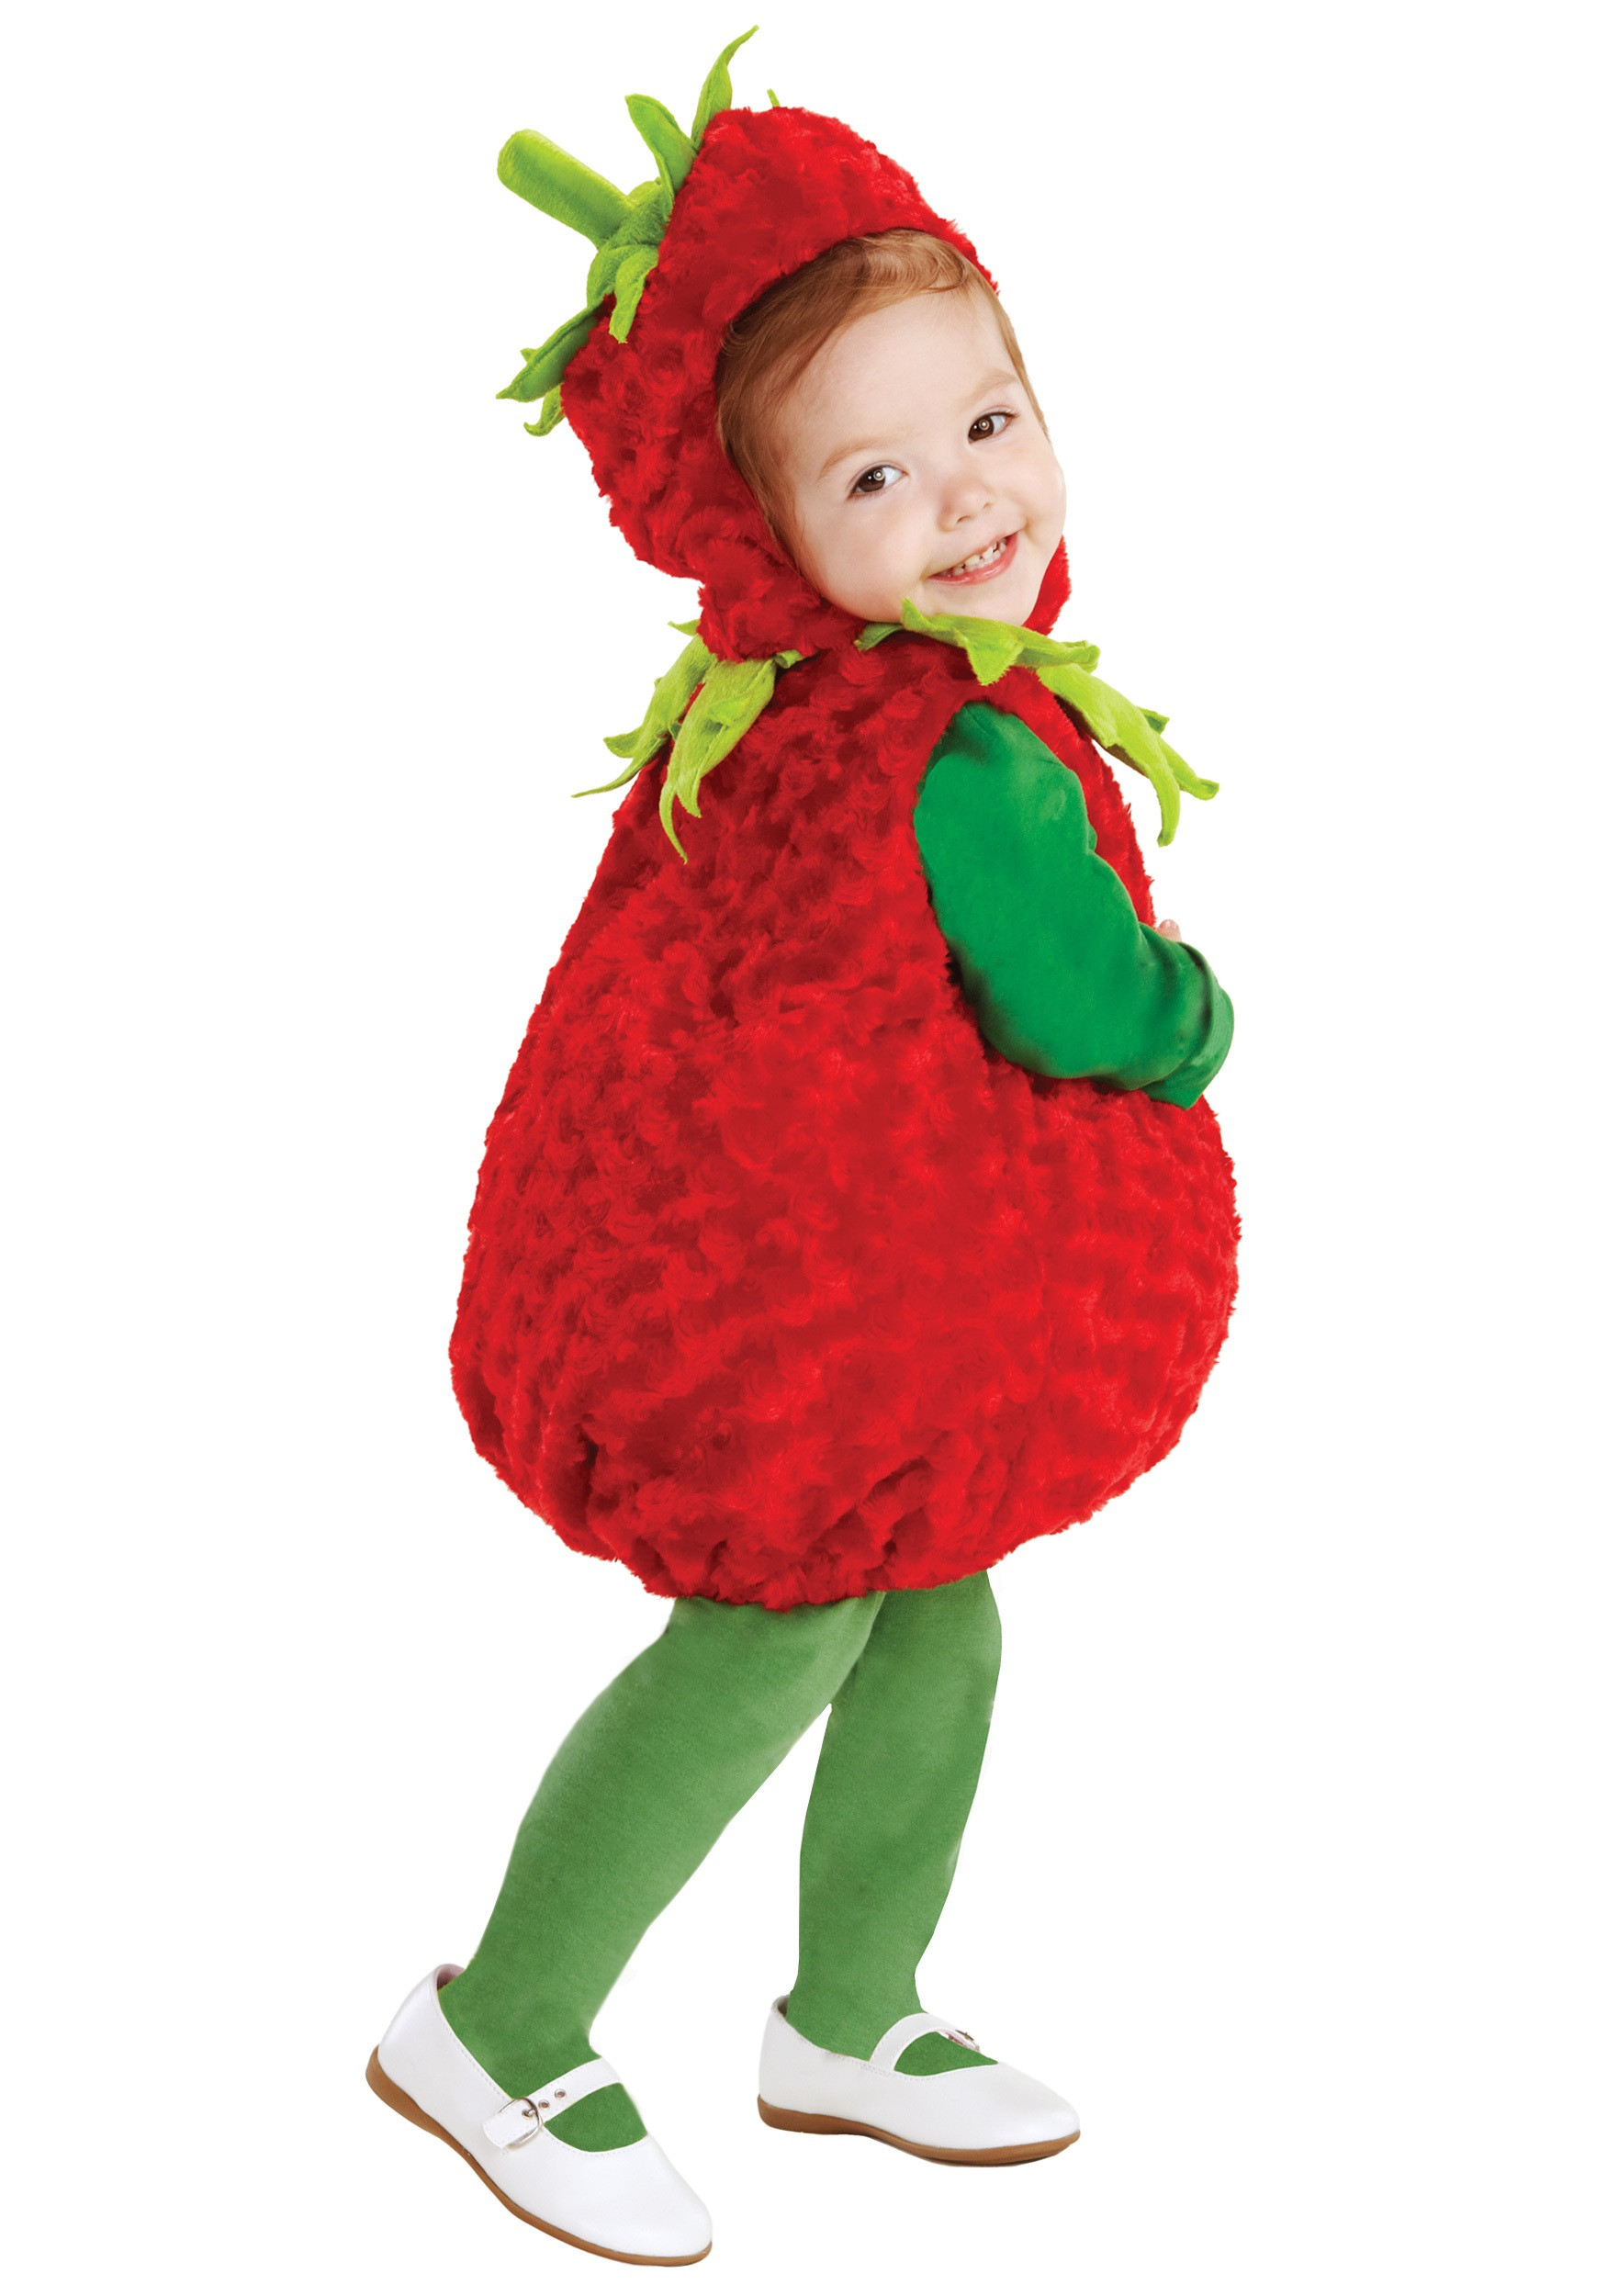 Strawberry Shortcake Costume Baby
 Toddler Red Strawberry Costume